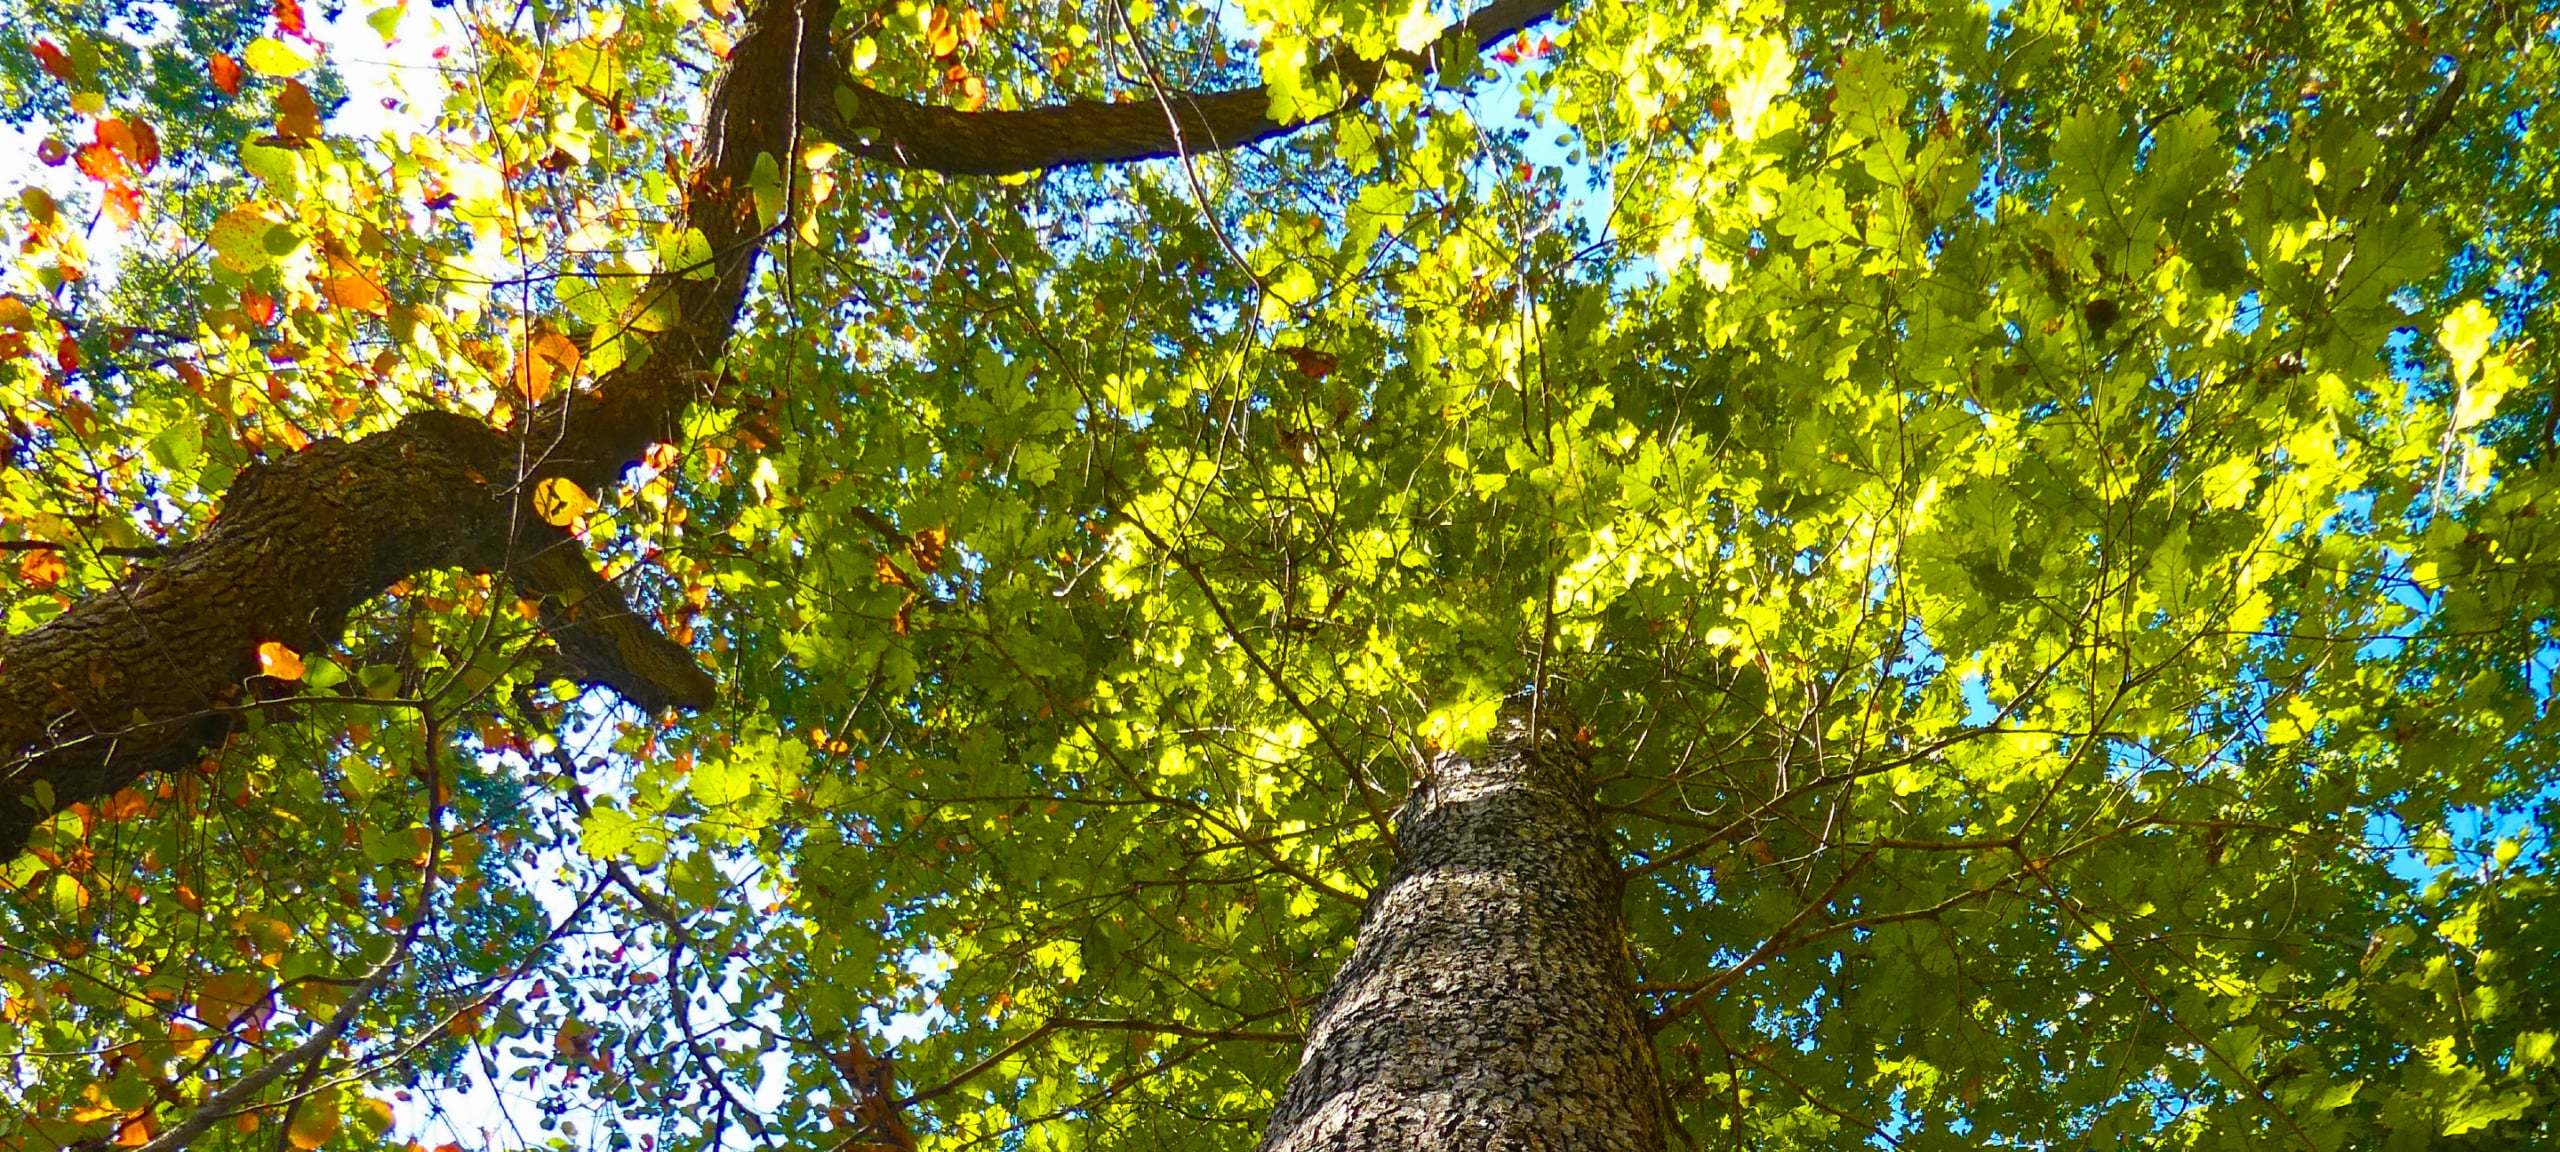 Upwards view of sunny oak trees in Maryland